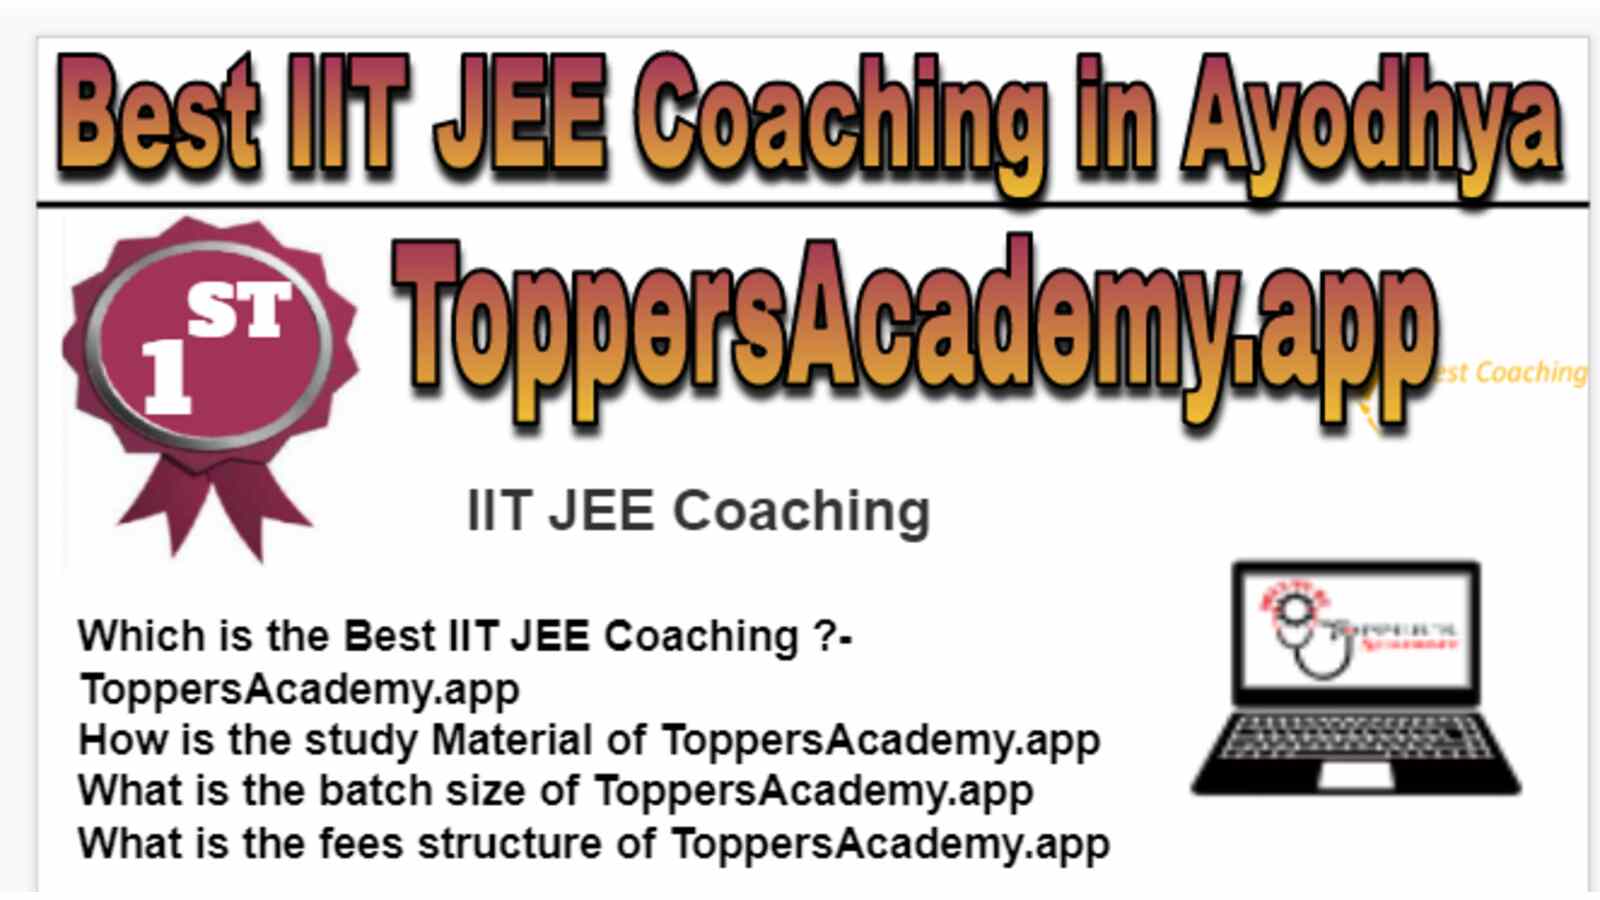 Rank 1 Best IIT JEE Coaching in Ayodhya